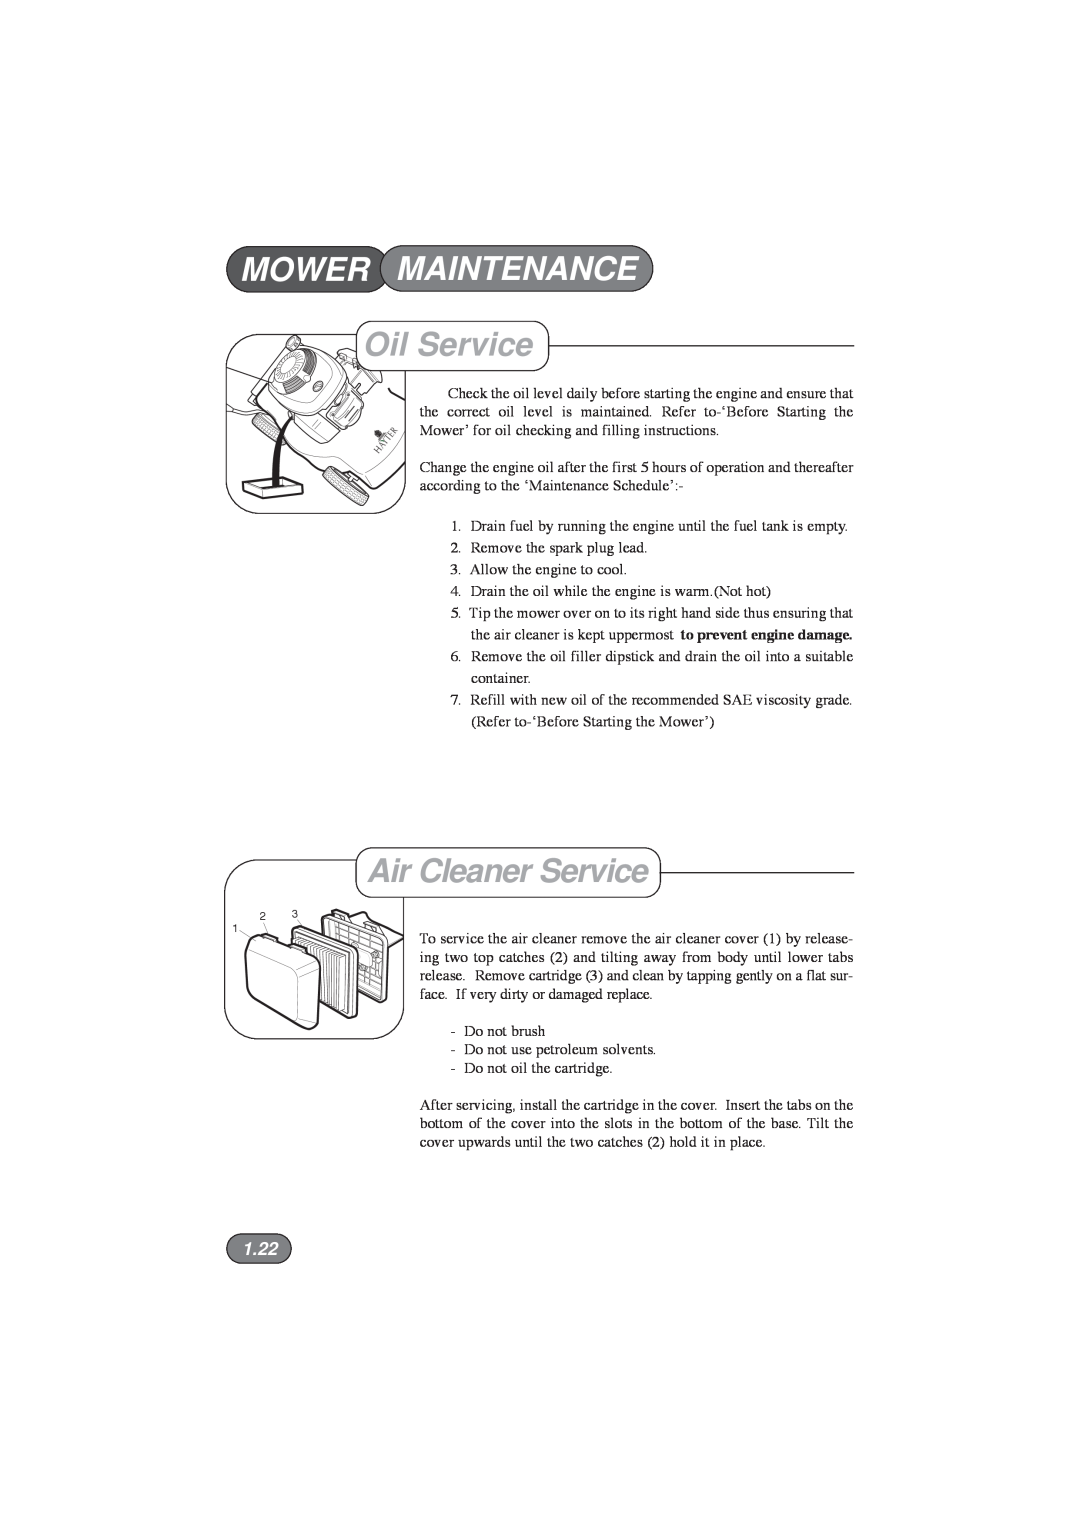 Hayter Mowers 433D, 435D, 434D, 432D manual Oil Service, Air Cleaner Service, 1.22, Mower Maintenance 